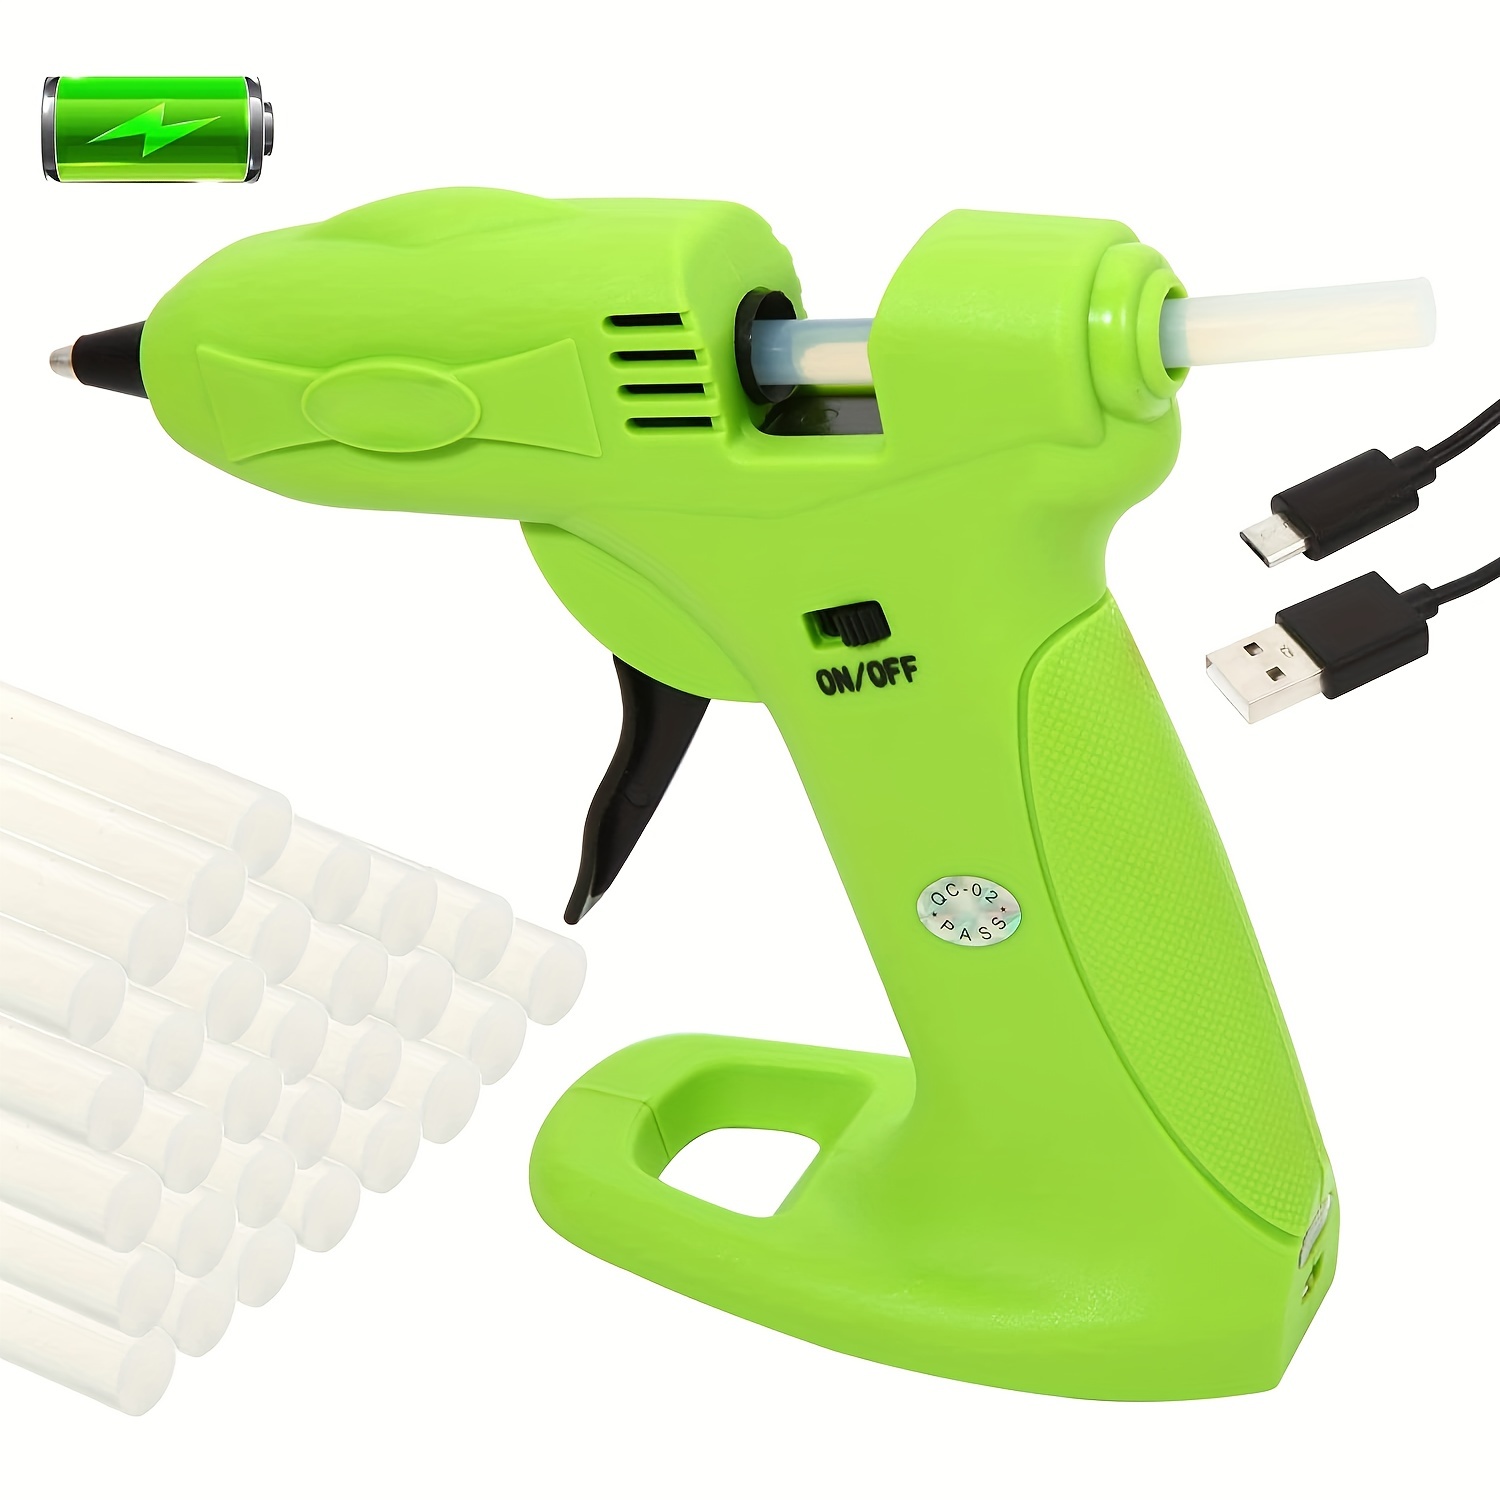 Cordless Hot Melt Glue Gun Rechargeable Quick Repairs High Temp Hot Glue Gun Kit with 30 Pcs Glue Sticks, Yellow